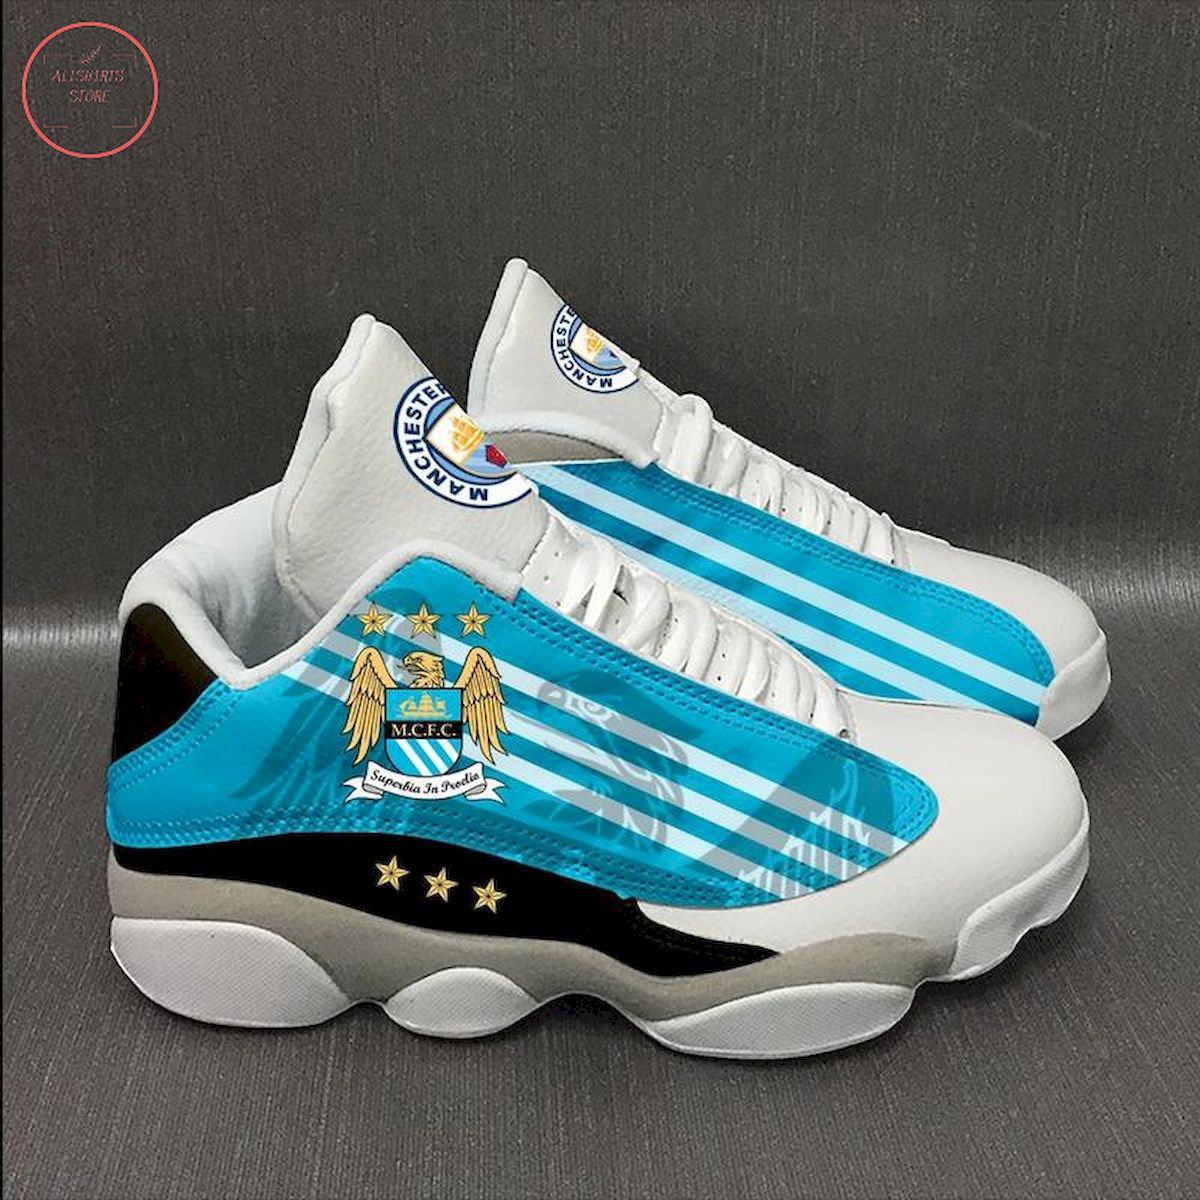 Manchester City FC Air Jordan 13 Sneaker Shoes